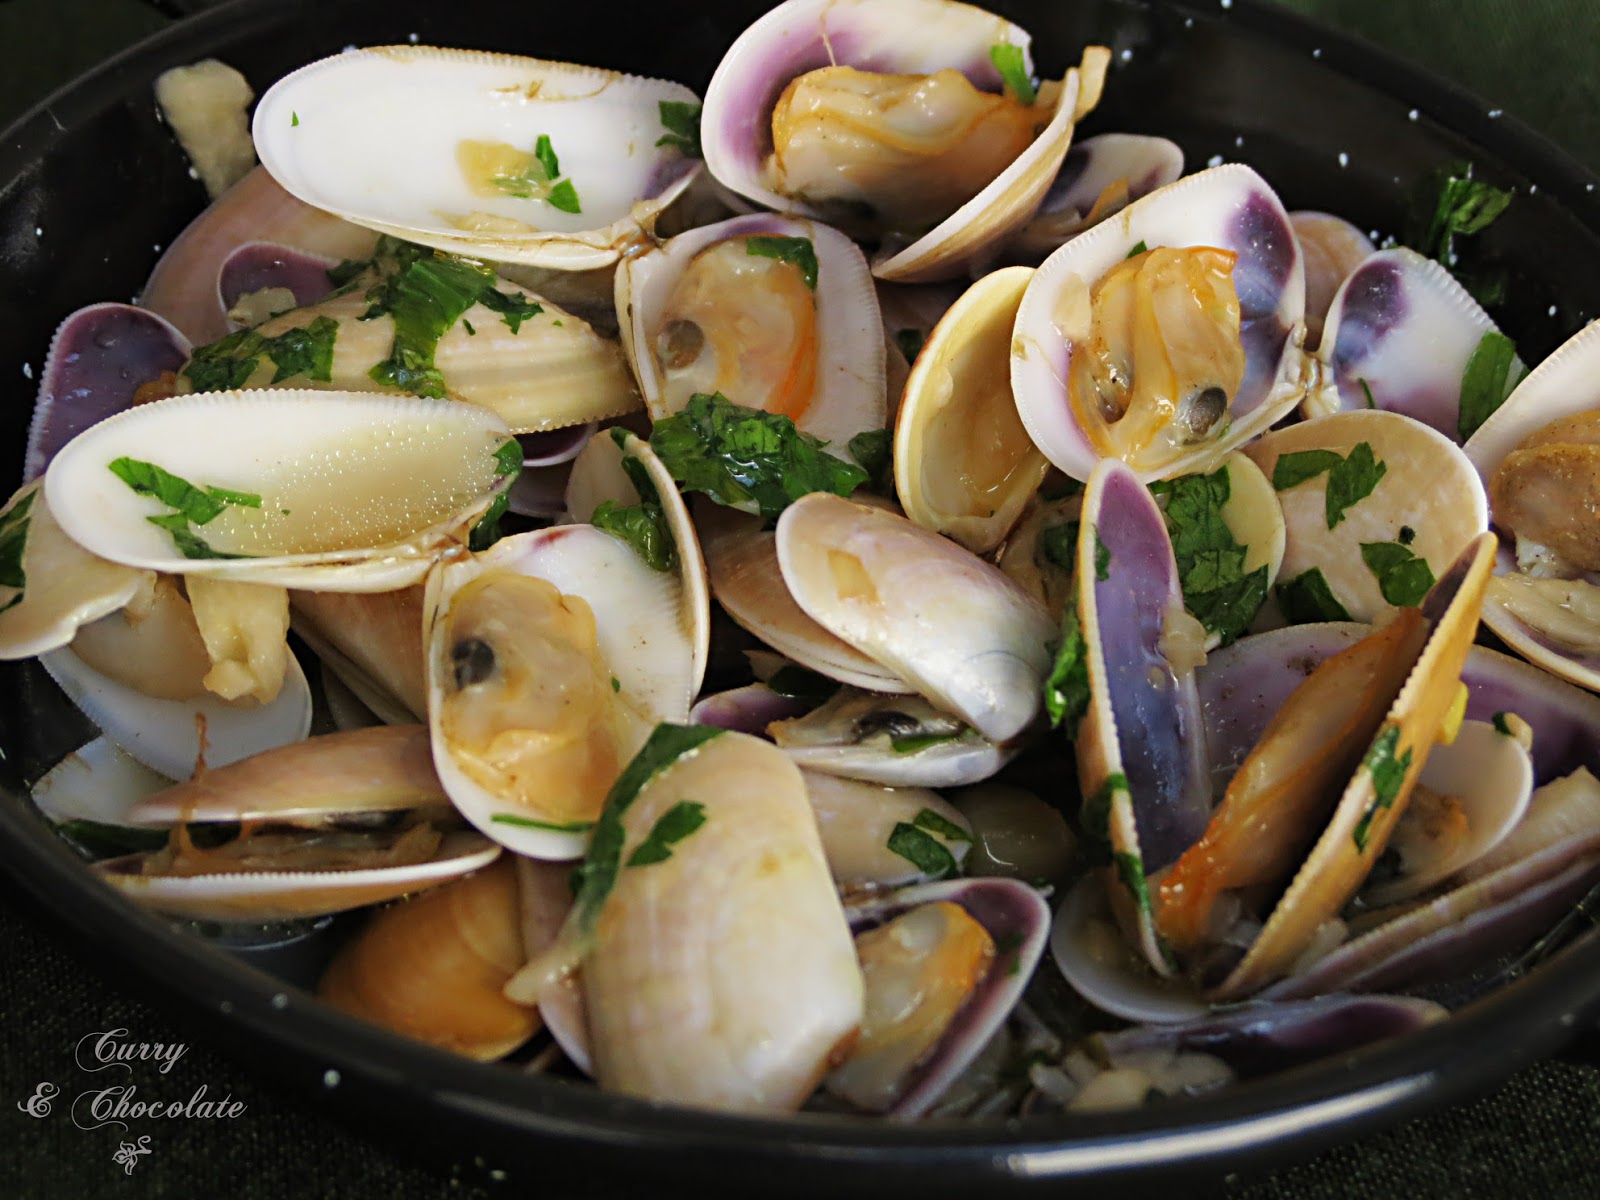 Coquinas al coñac o brandy – Wedge shell clams with brandy